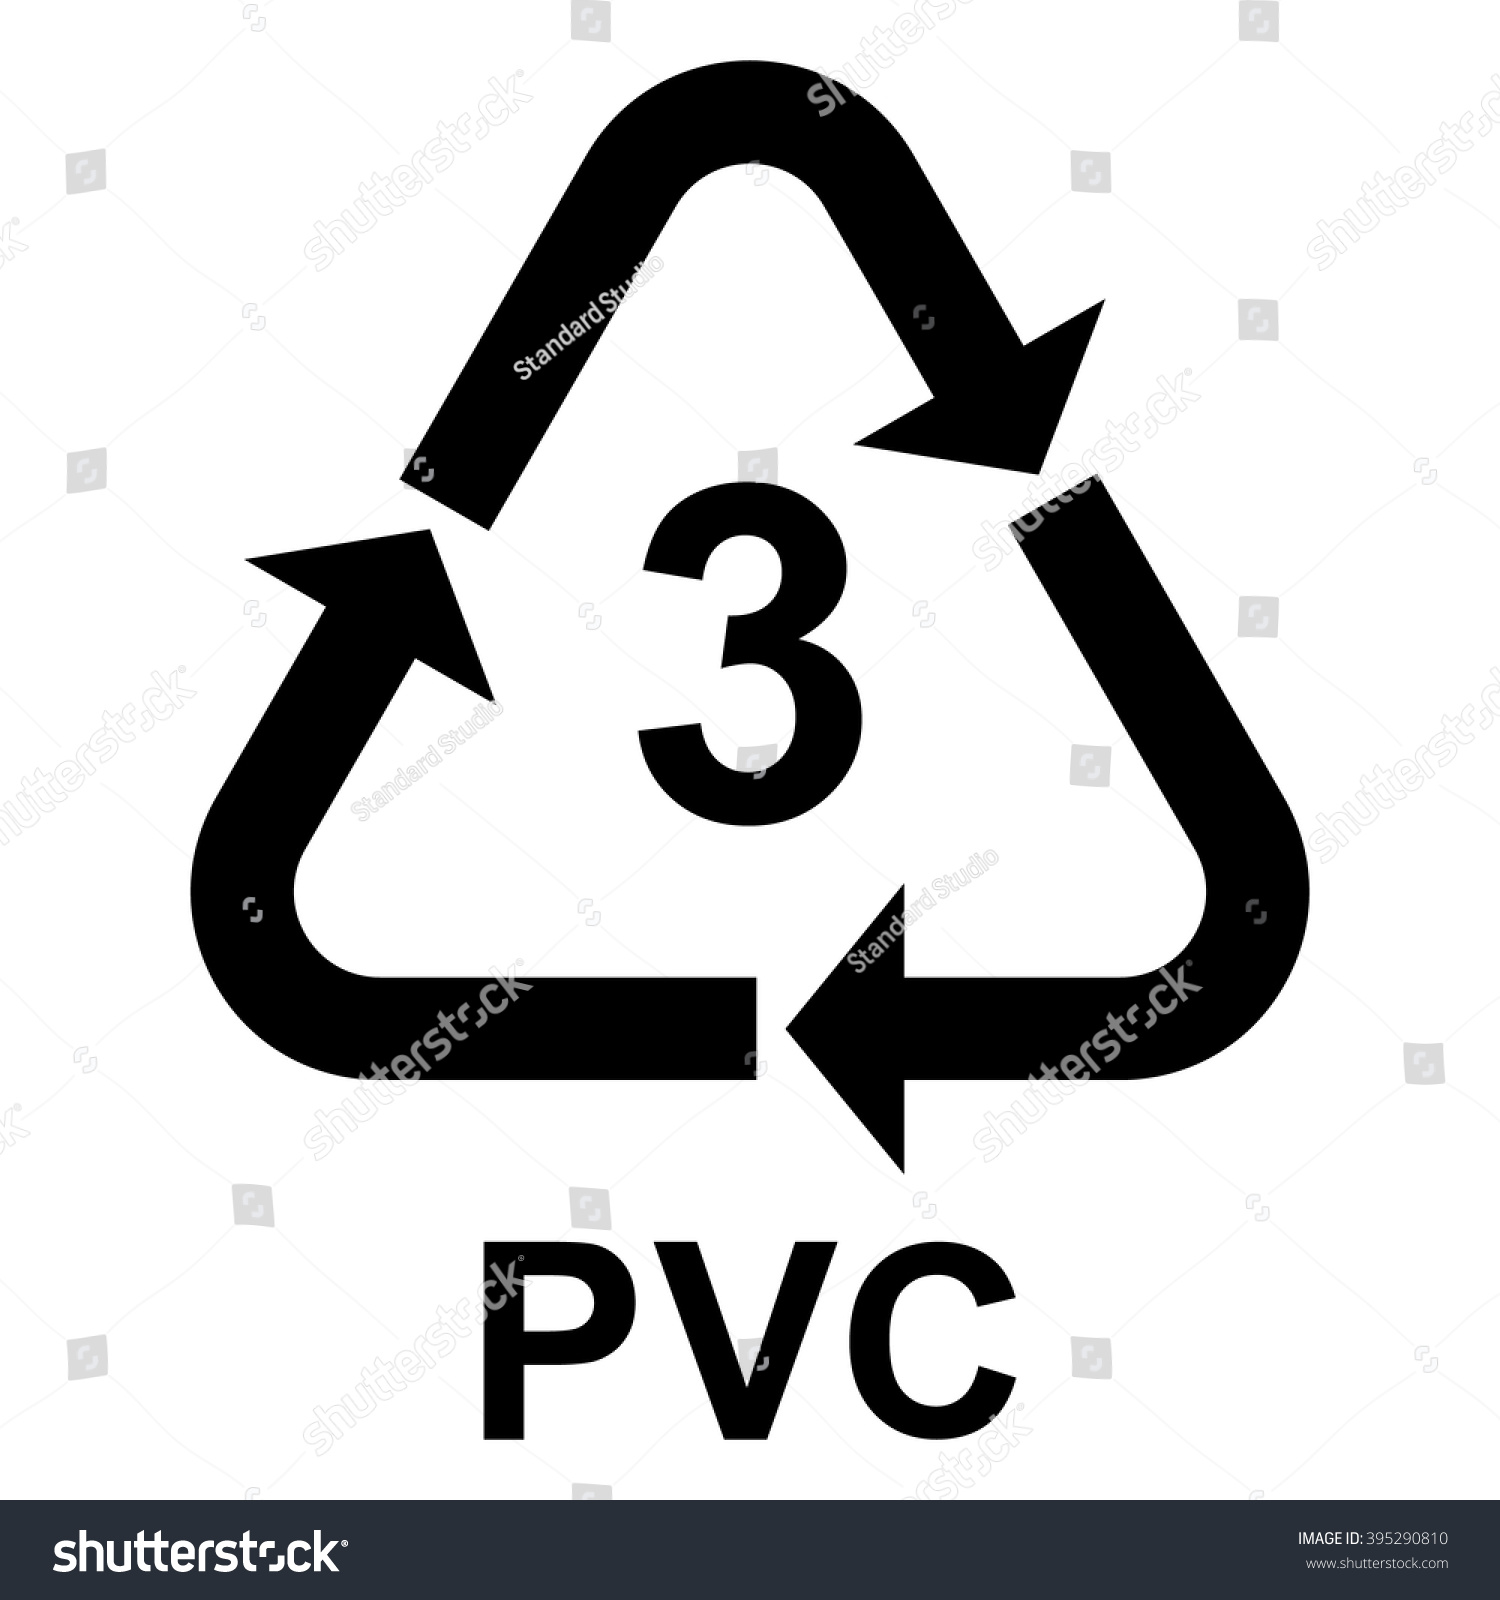 Plastic recycling symbol PVC 3 , Plastic recycling code PVC 3 , vector illustration #395290810